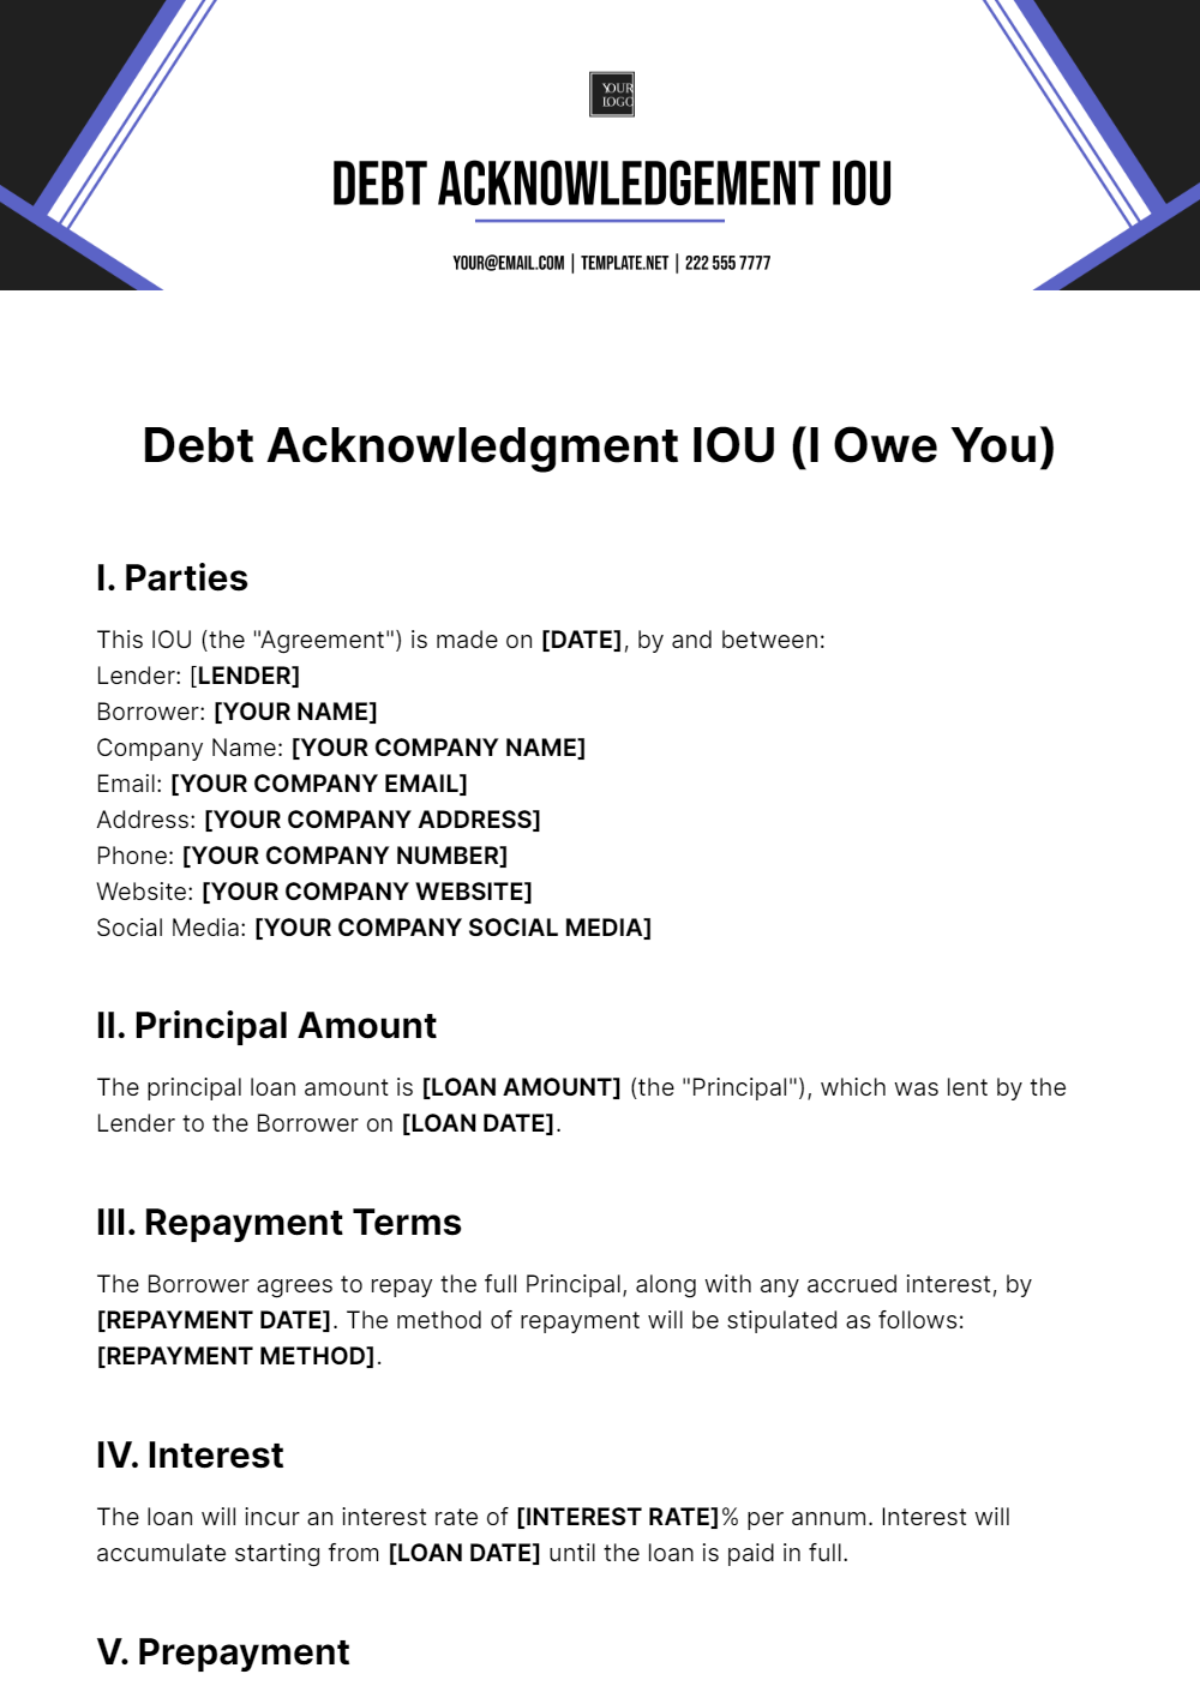 Debt Acknowledgment IOU Template